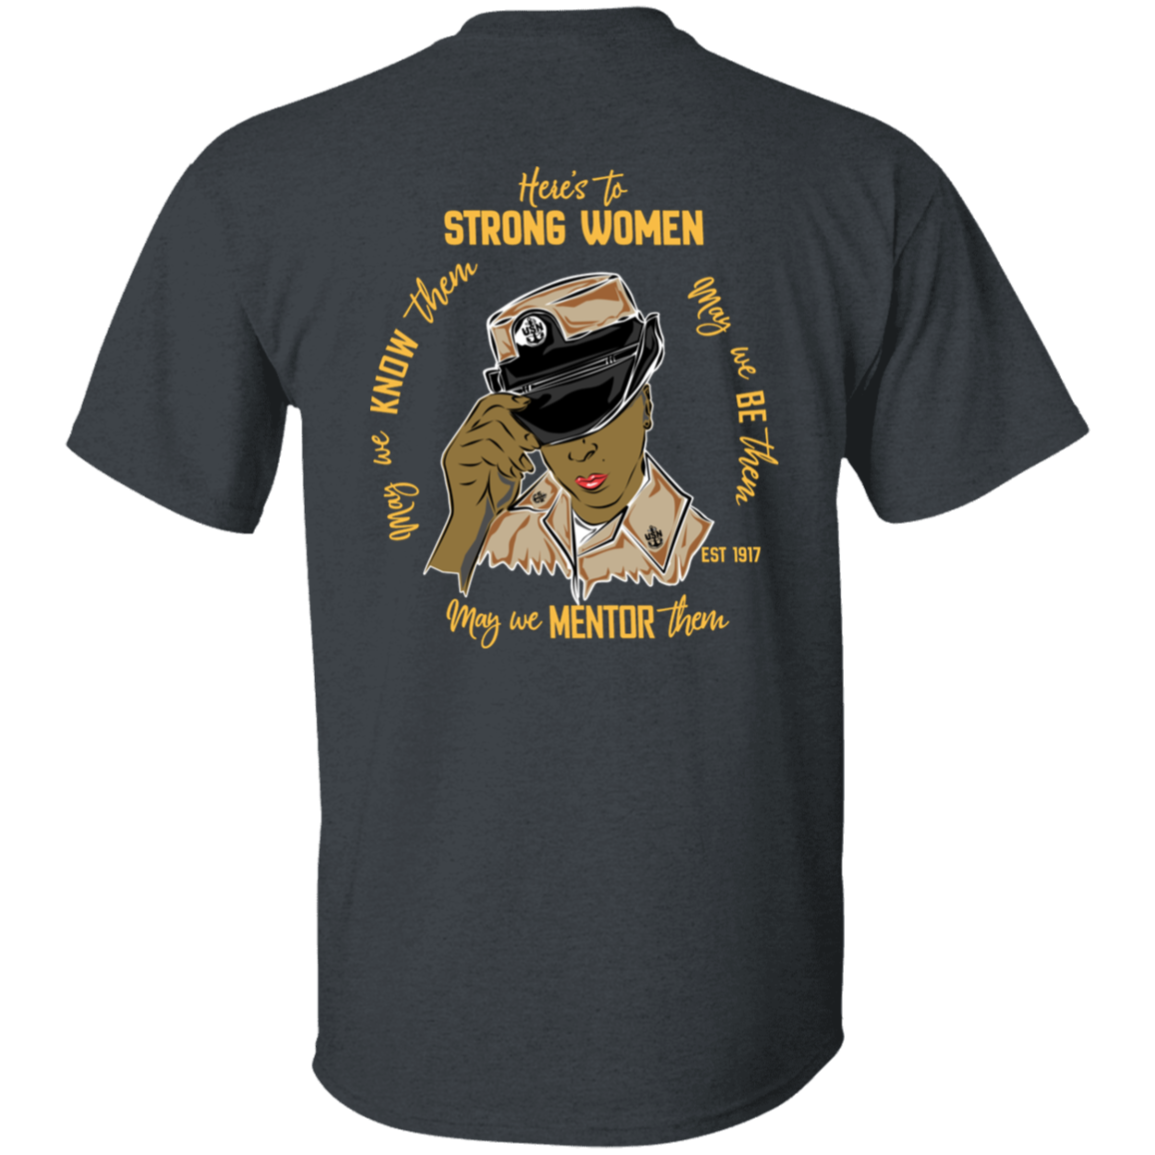 Strong Women V2 5.3 oz. T-Shirt